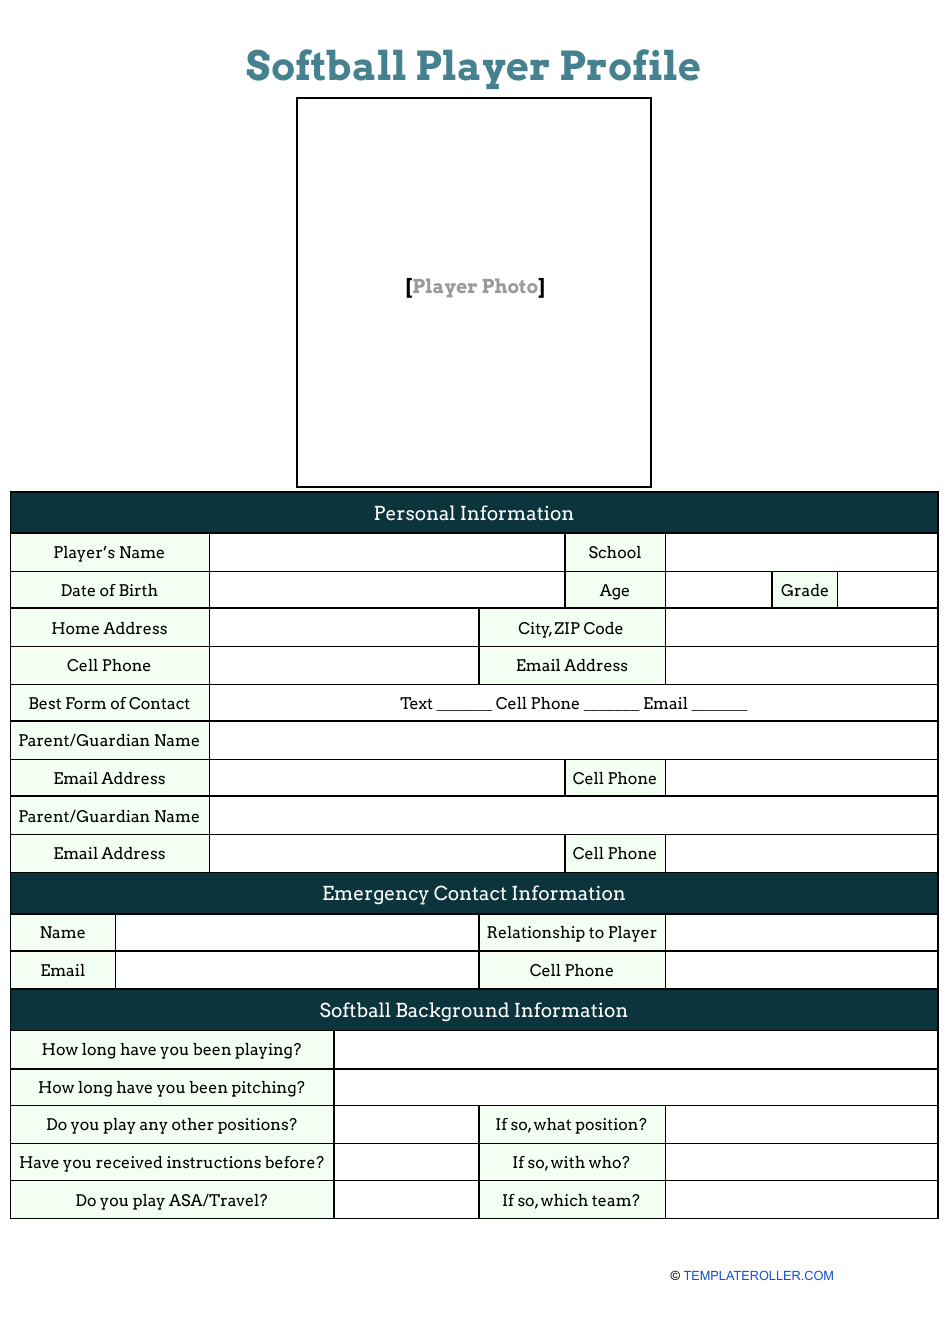 softball-player-profile-template-download-printable-pdf-templateroller